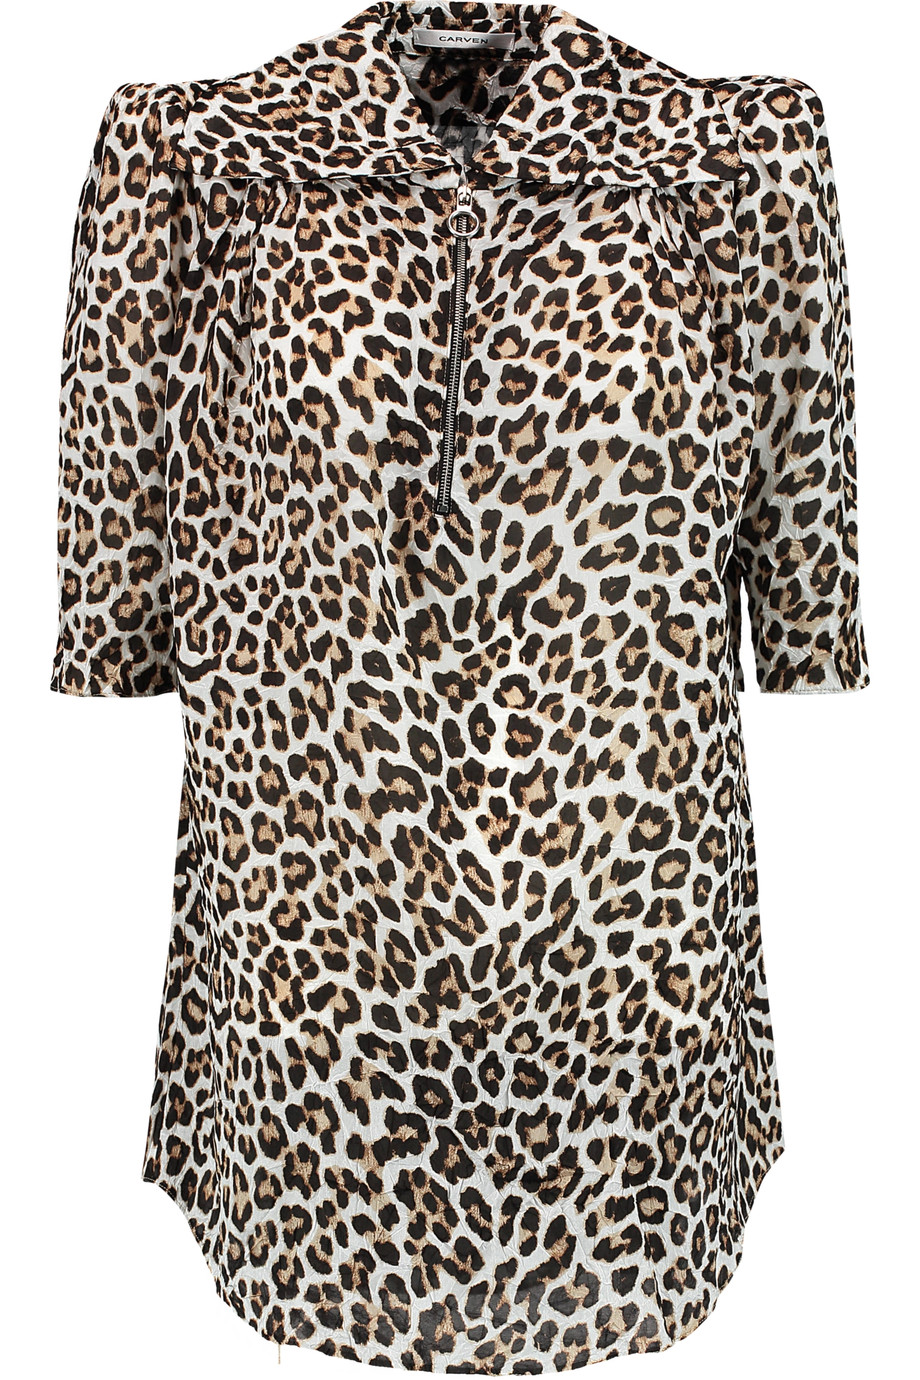 Carven Leopard-print Crinkled-voile Top | ModeSens